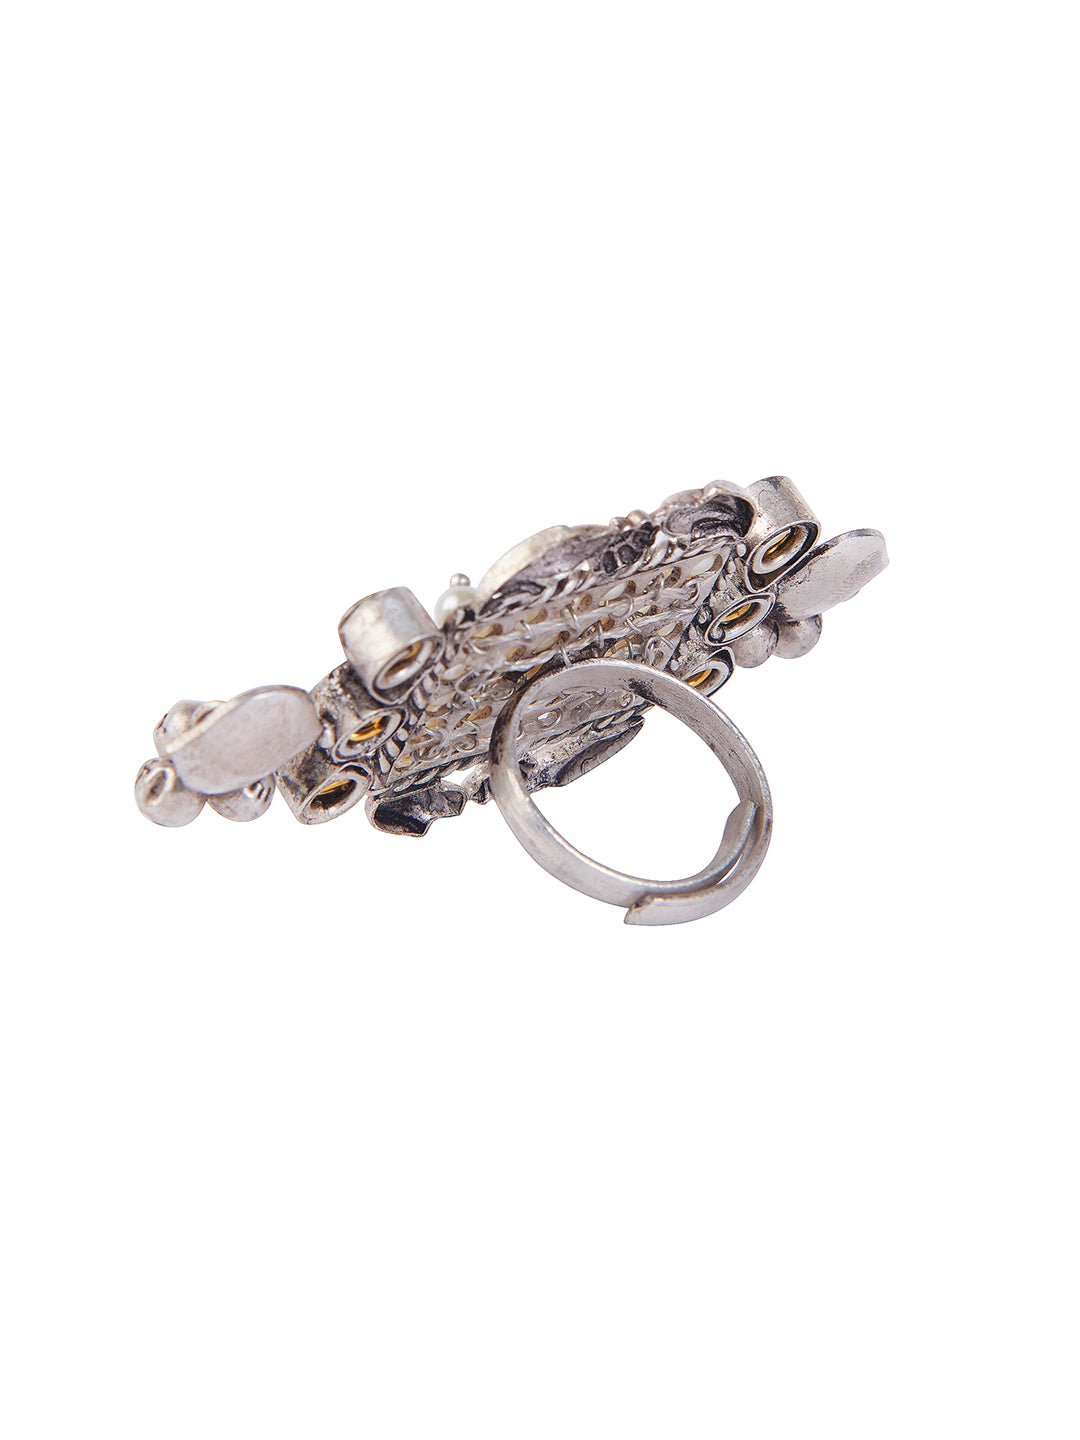 2 x Silver Plated 9 Bells Toe Rings Women Girls Ghungroo Ethnic Adjustable  Rings | eBay